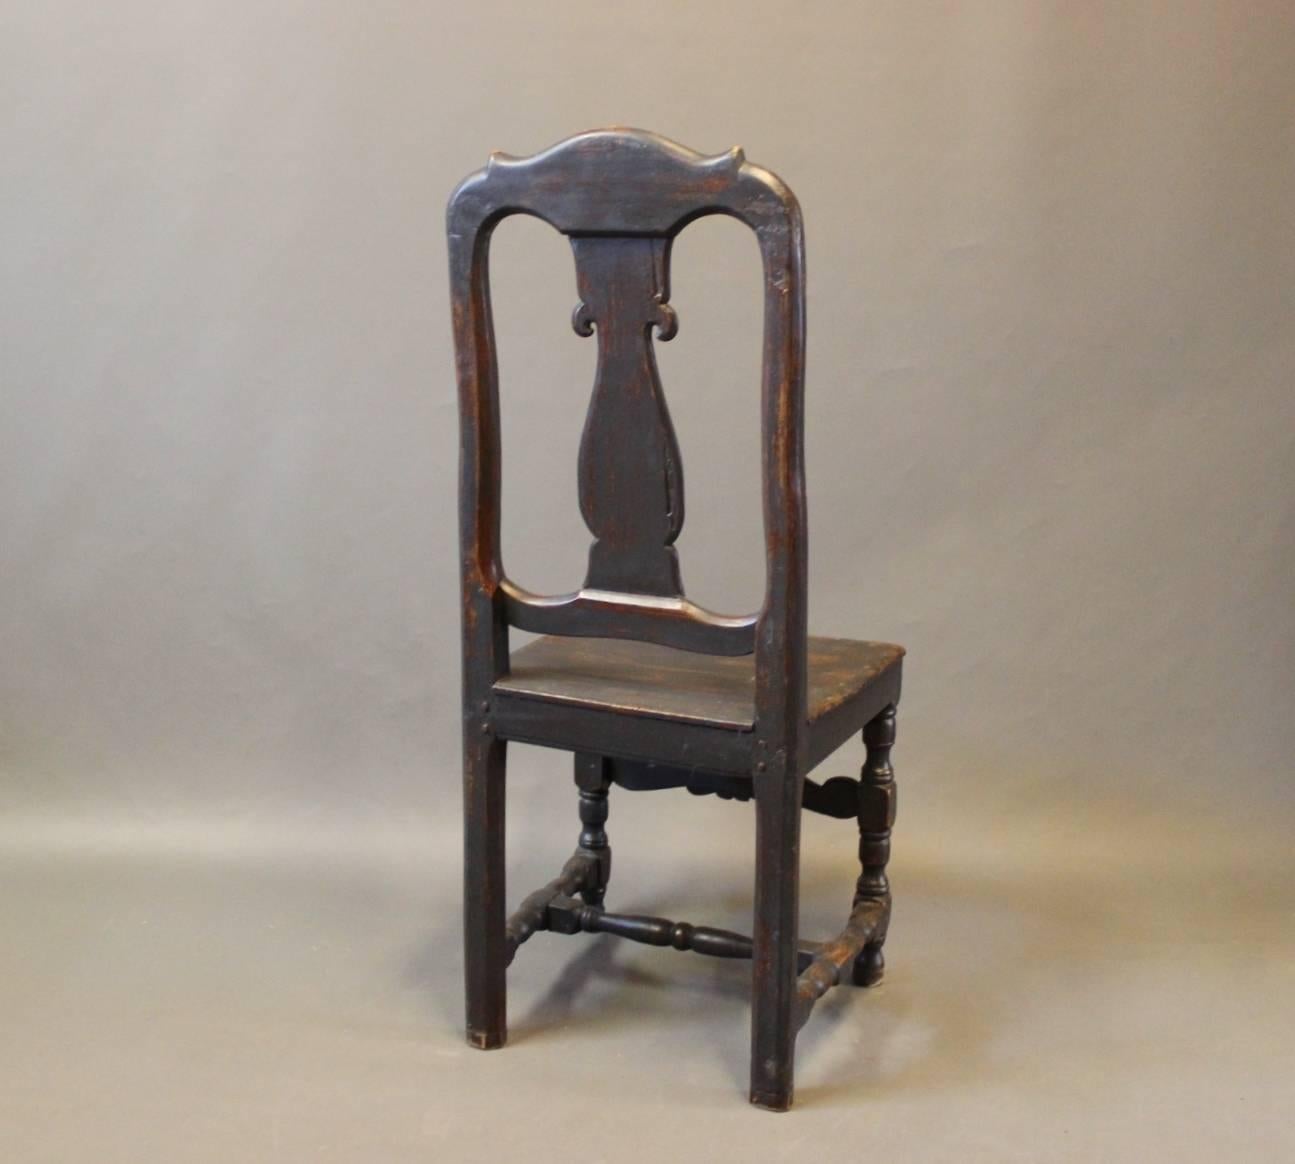 Barocker Stuhl aus bemaltem Holz, ca. 1860er Jahre (Dänisch)